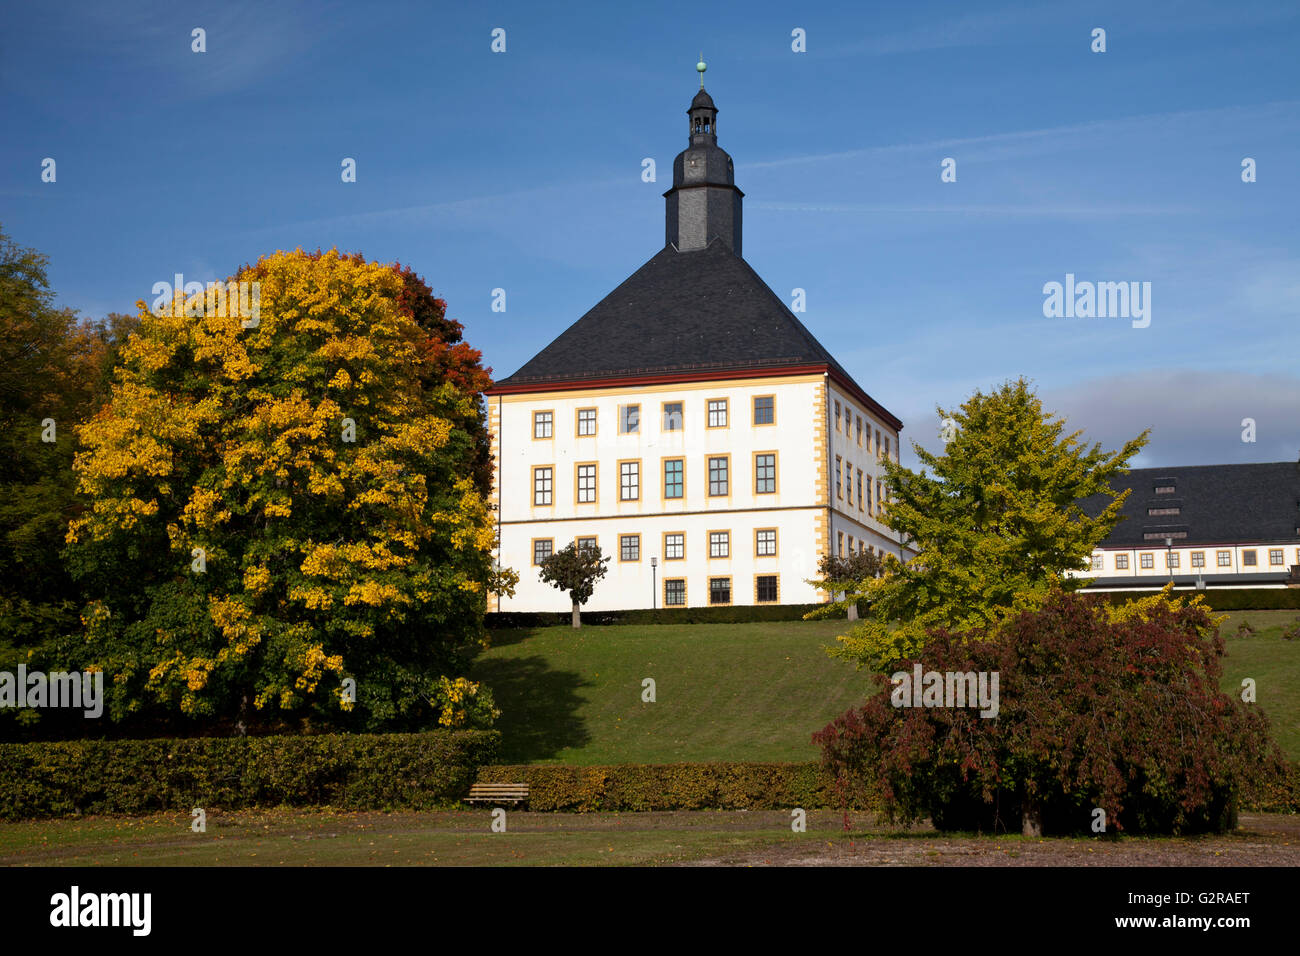 Schloss Friedenstein Palace, Gotha, Thuringia, Germany Stock Photo